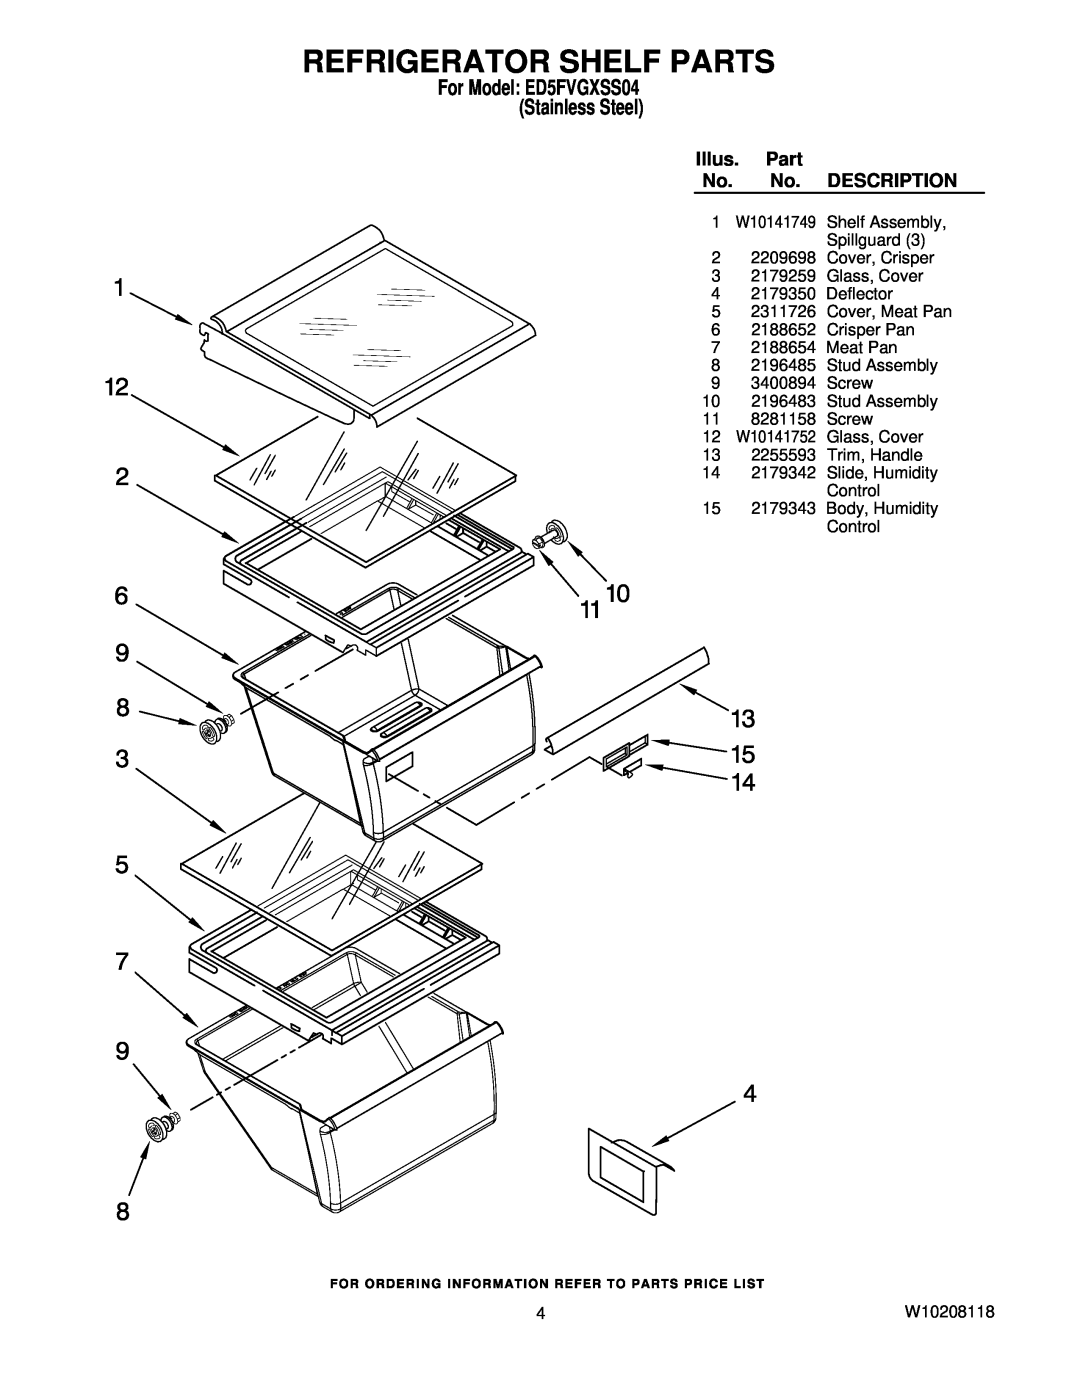 Whirlpool manual Refrigerator Shelf Parts, For Model ED5FVGXSS04 Stainless Steel, Illus. Part, Description, W10141749 